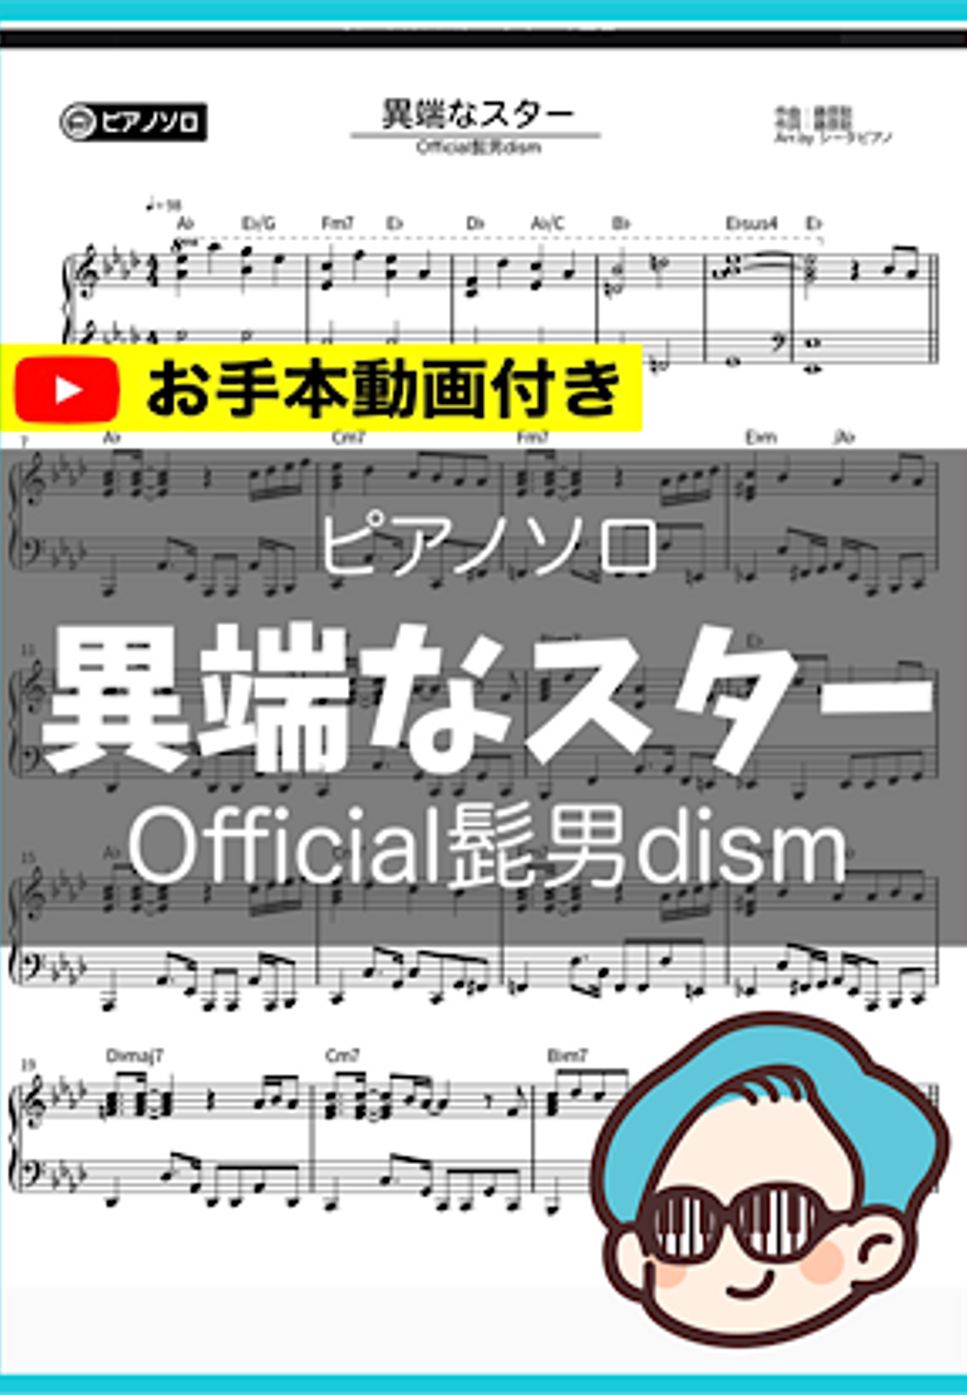 Official髭男dism - 異端なスター by シータピアノ